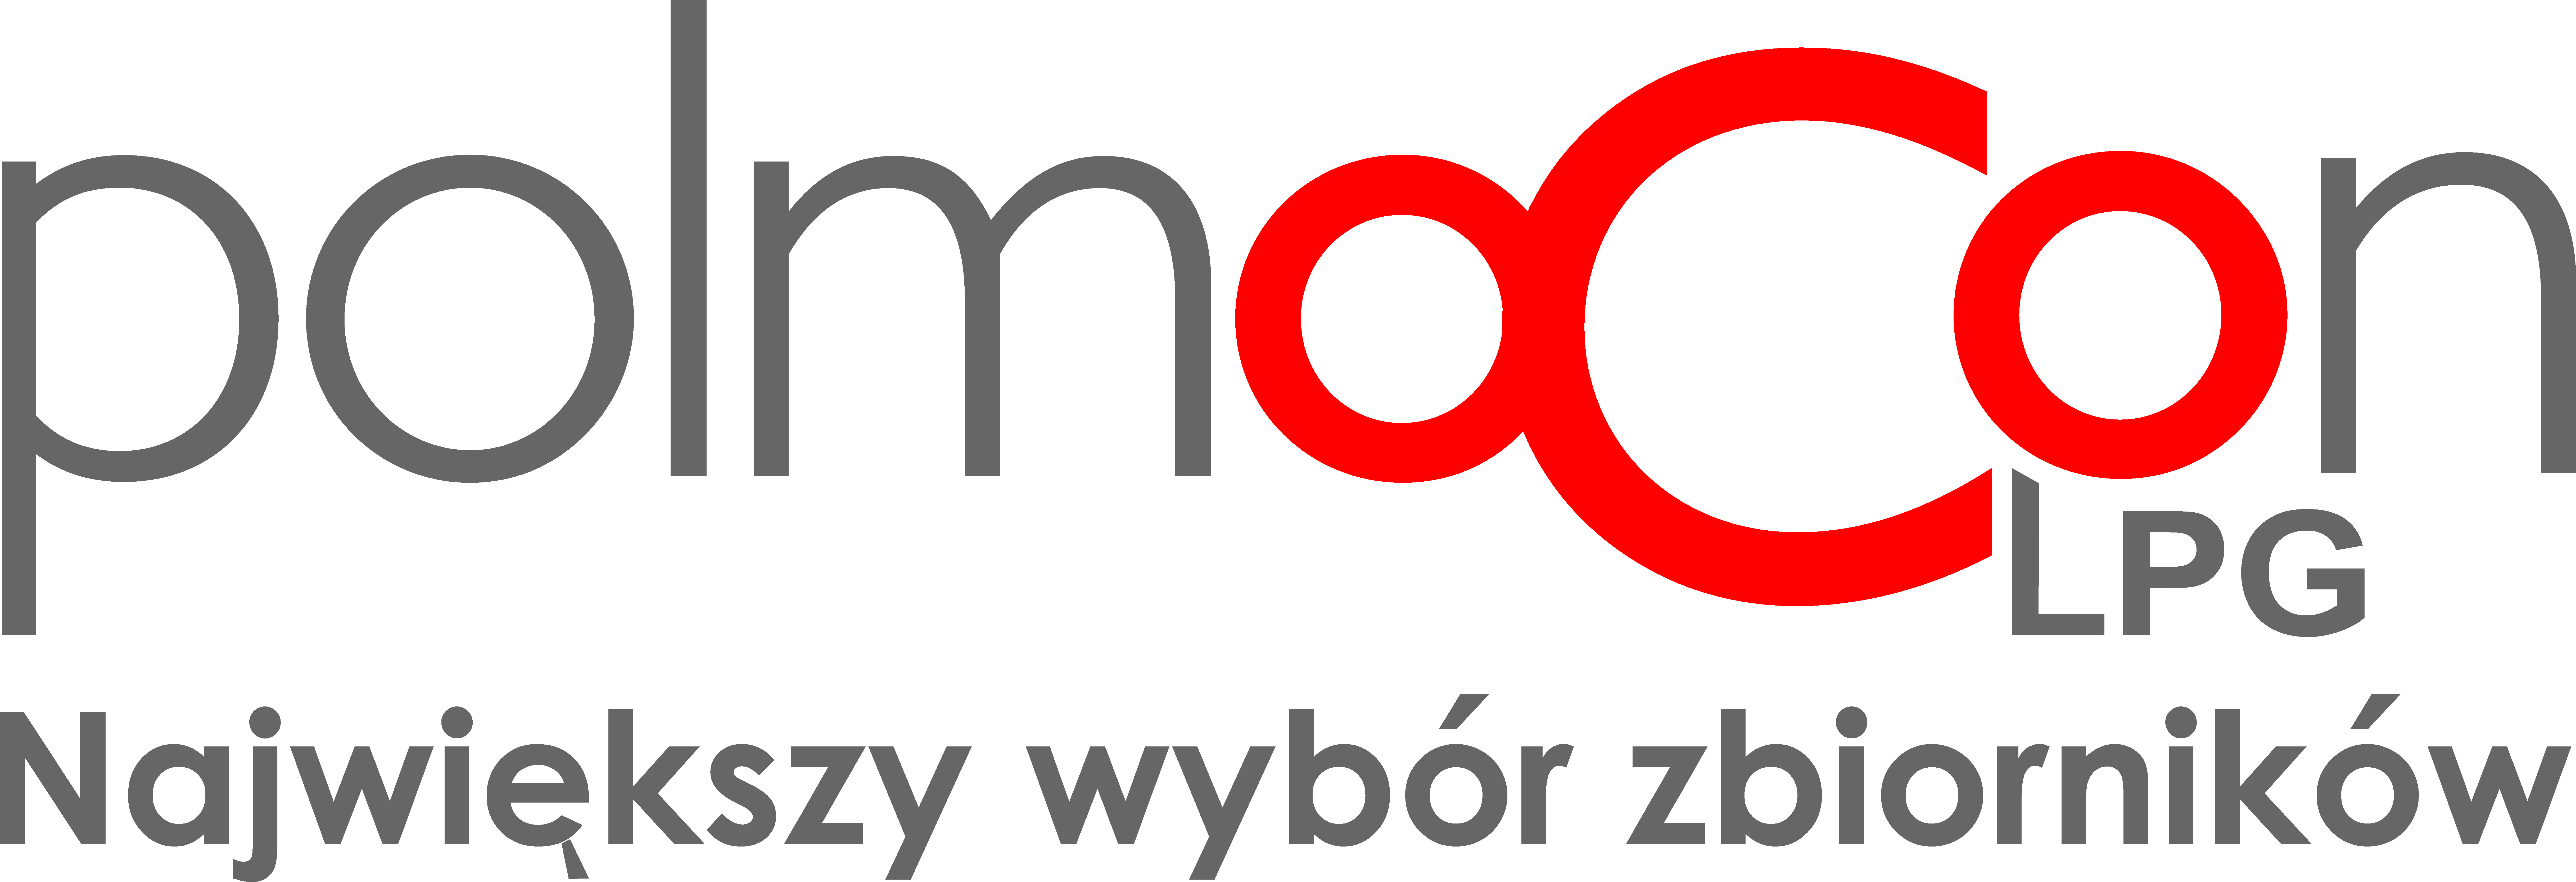 logo Polmocon